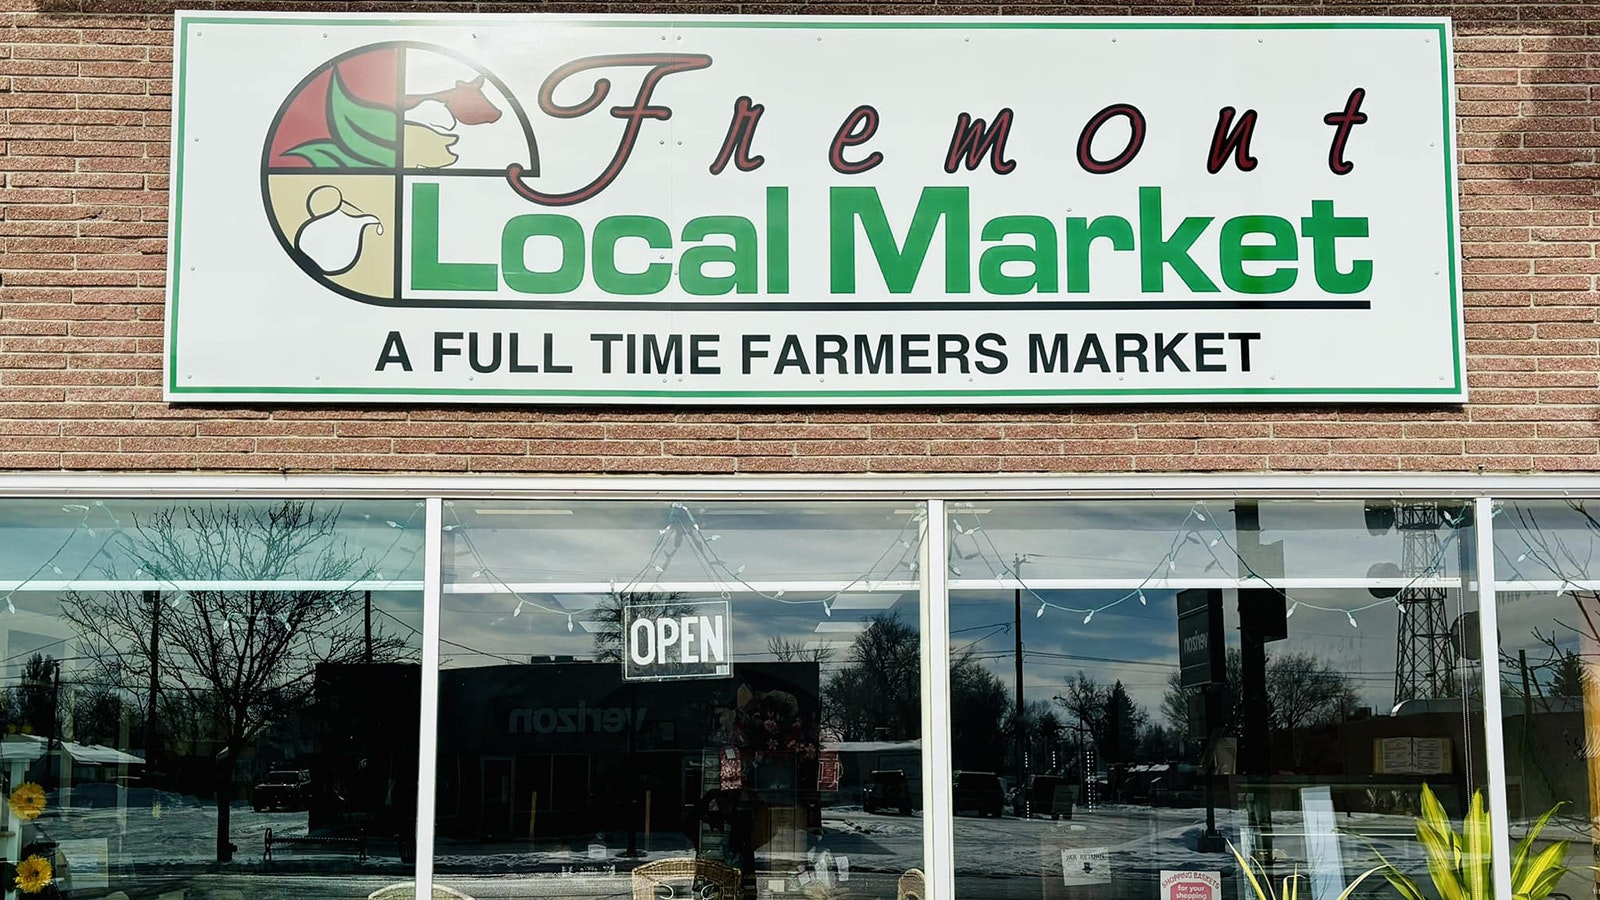 Fremont Local Market 3 3 24